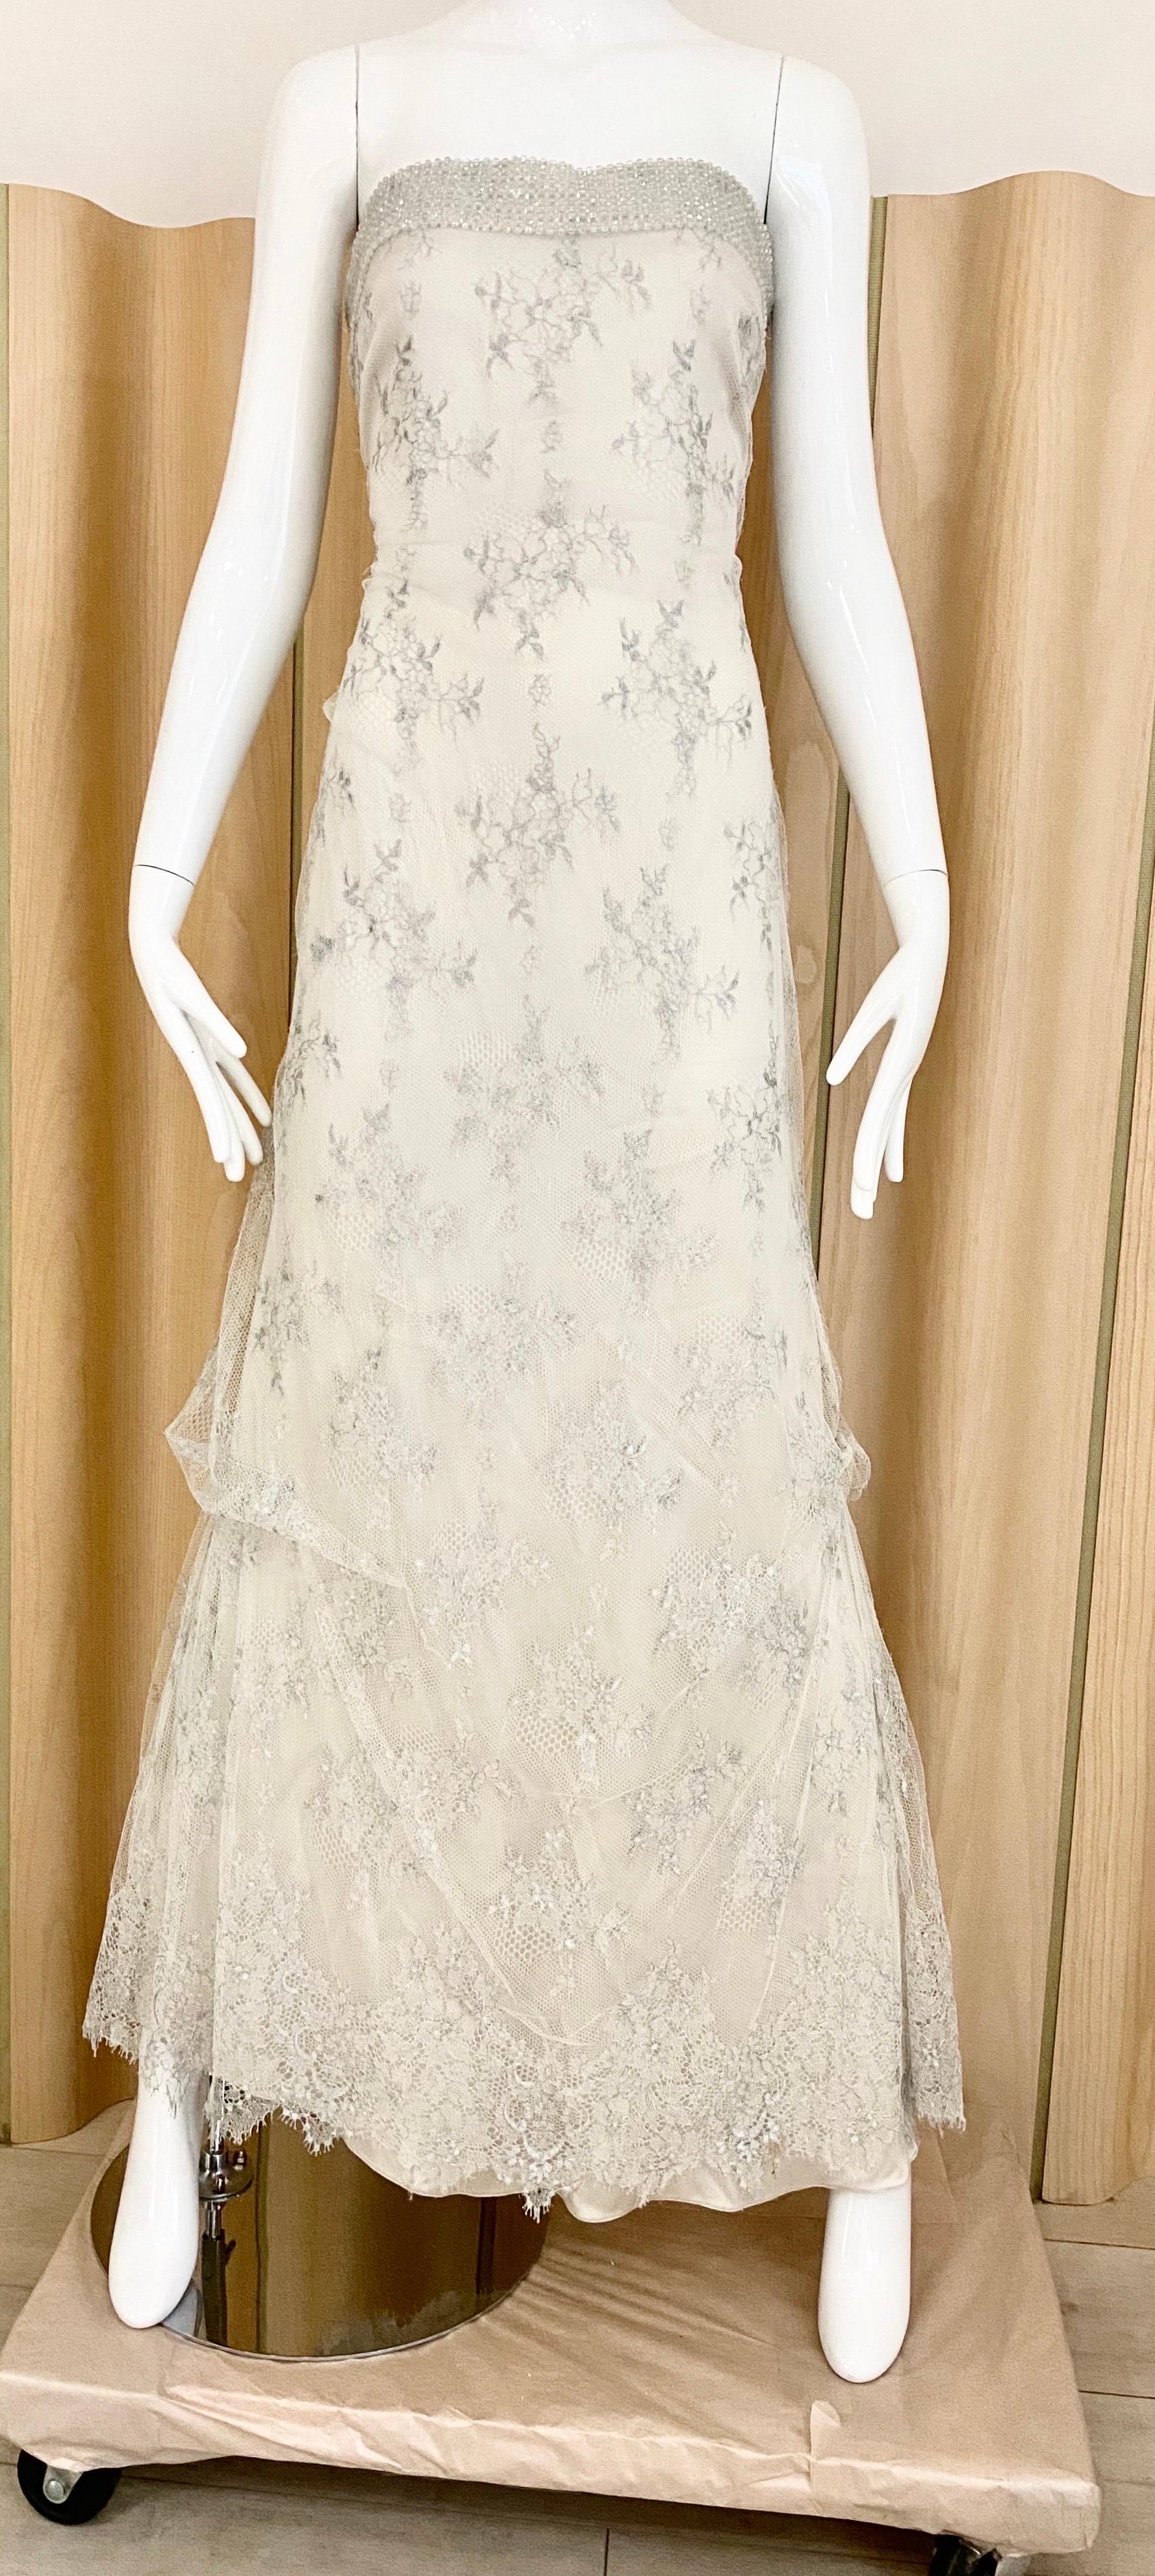 Giorgio Armani Strapless White and Silver Lace Gown For Sale 6